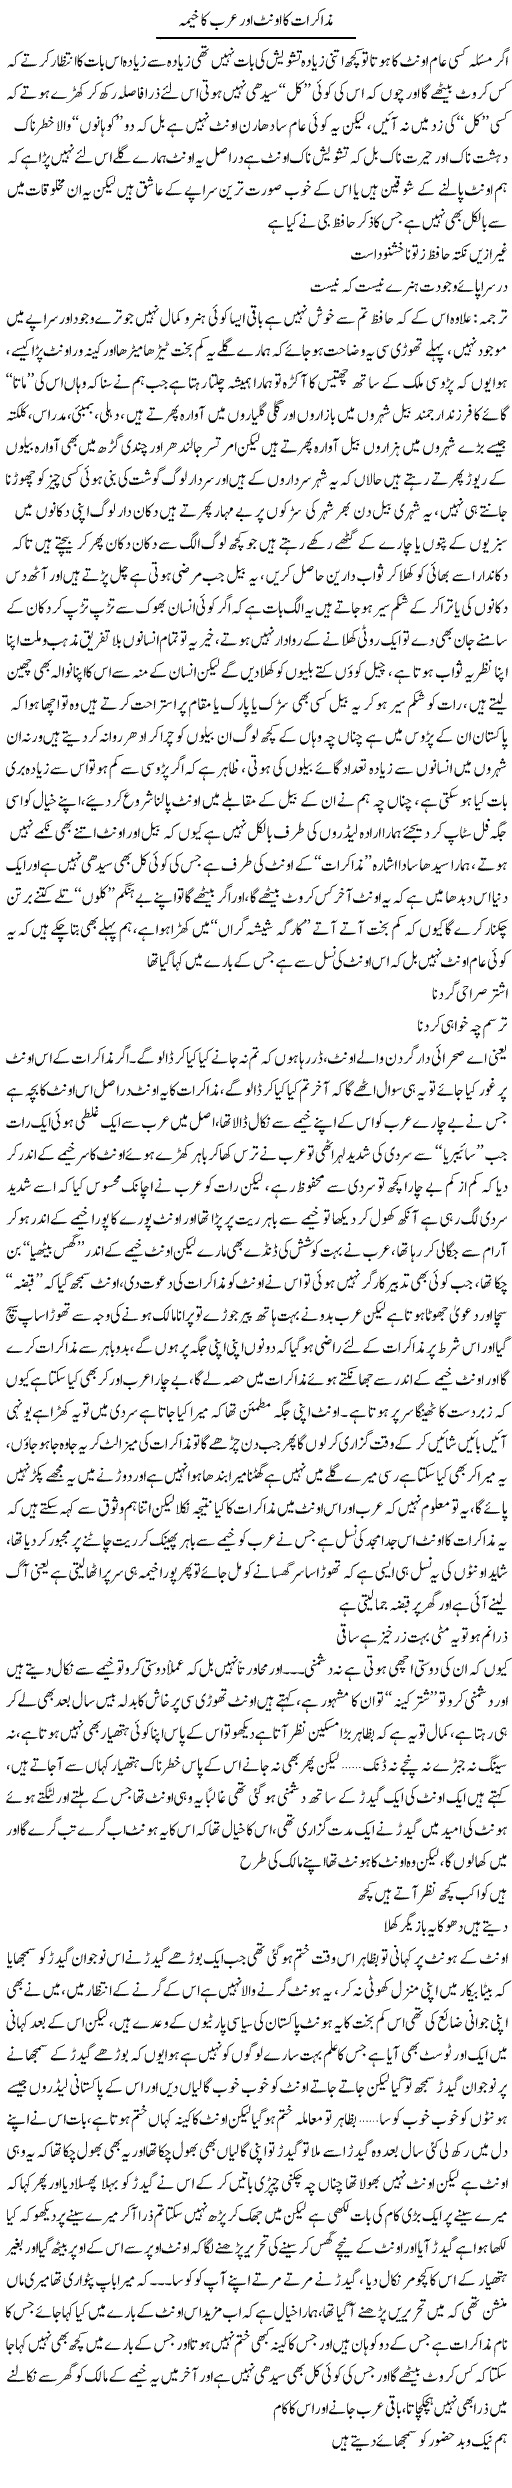 Muzakrat Ka Oont Our Arab Ka Khaima | Saad Ullah Jan Barq | Daily Urdu Columns